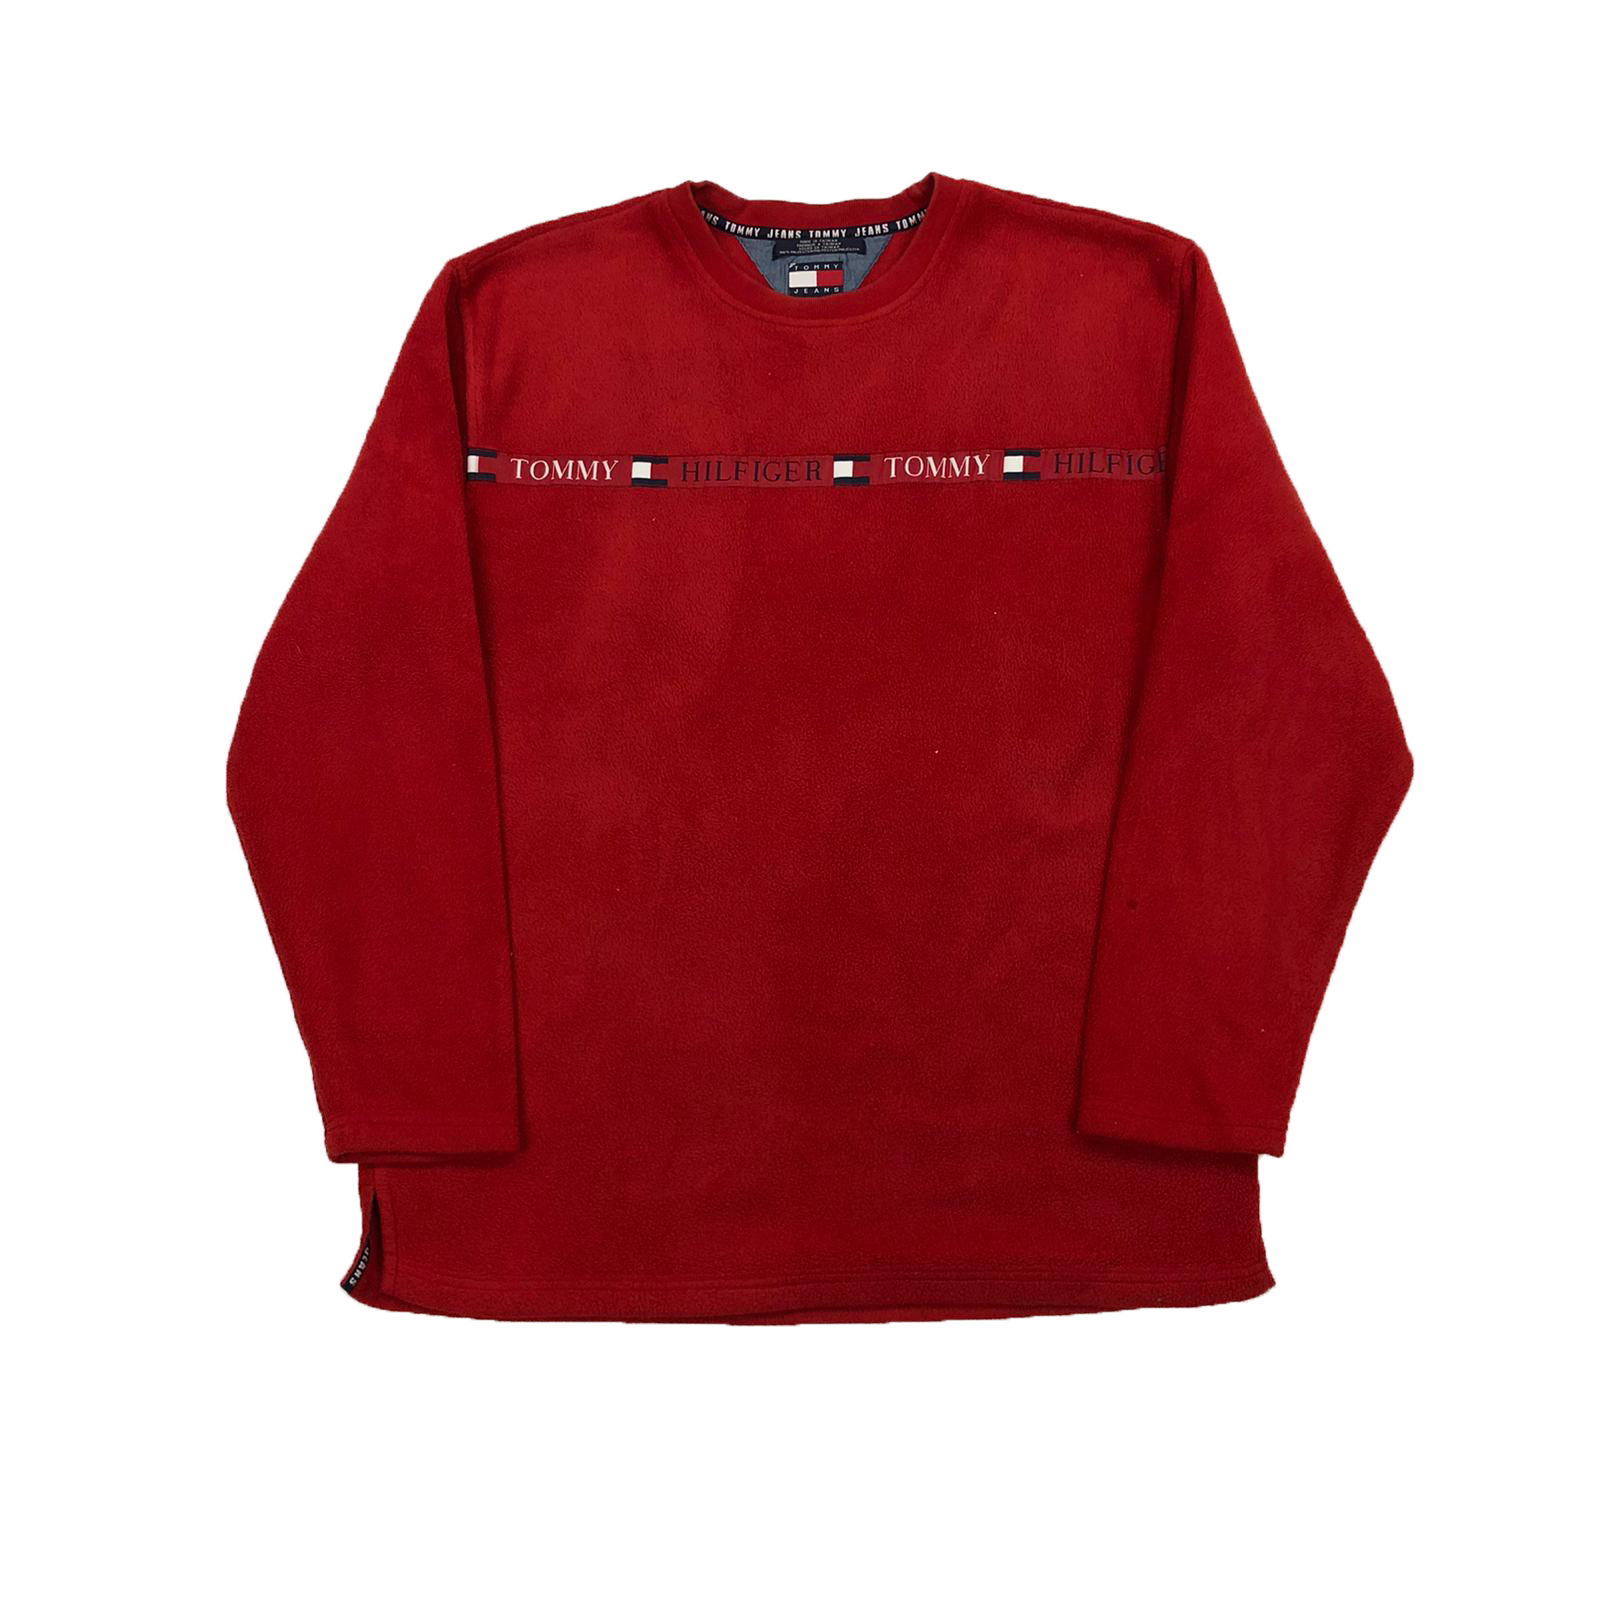 Tommy Hilfiger fleece sweatshirt